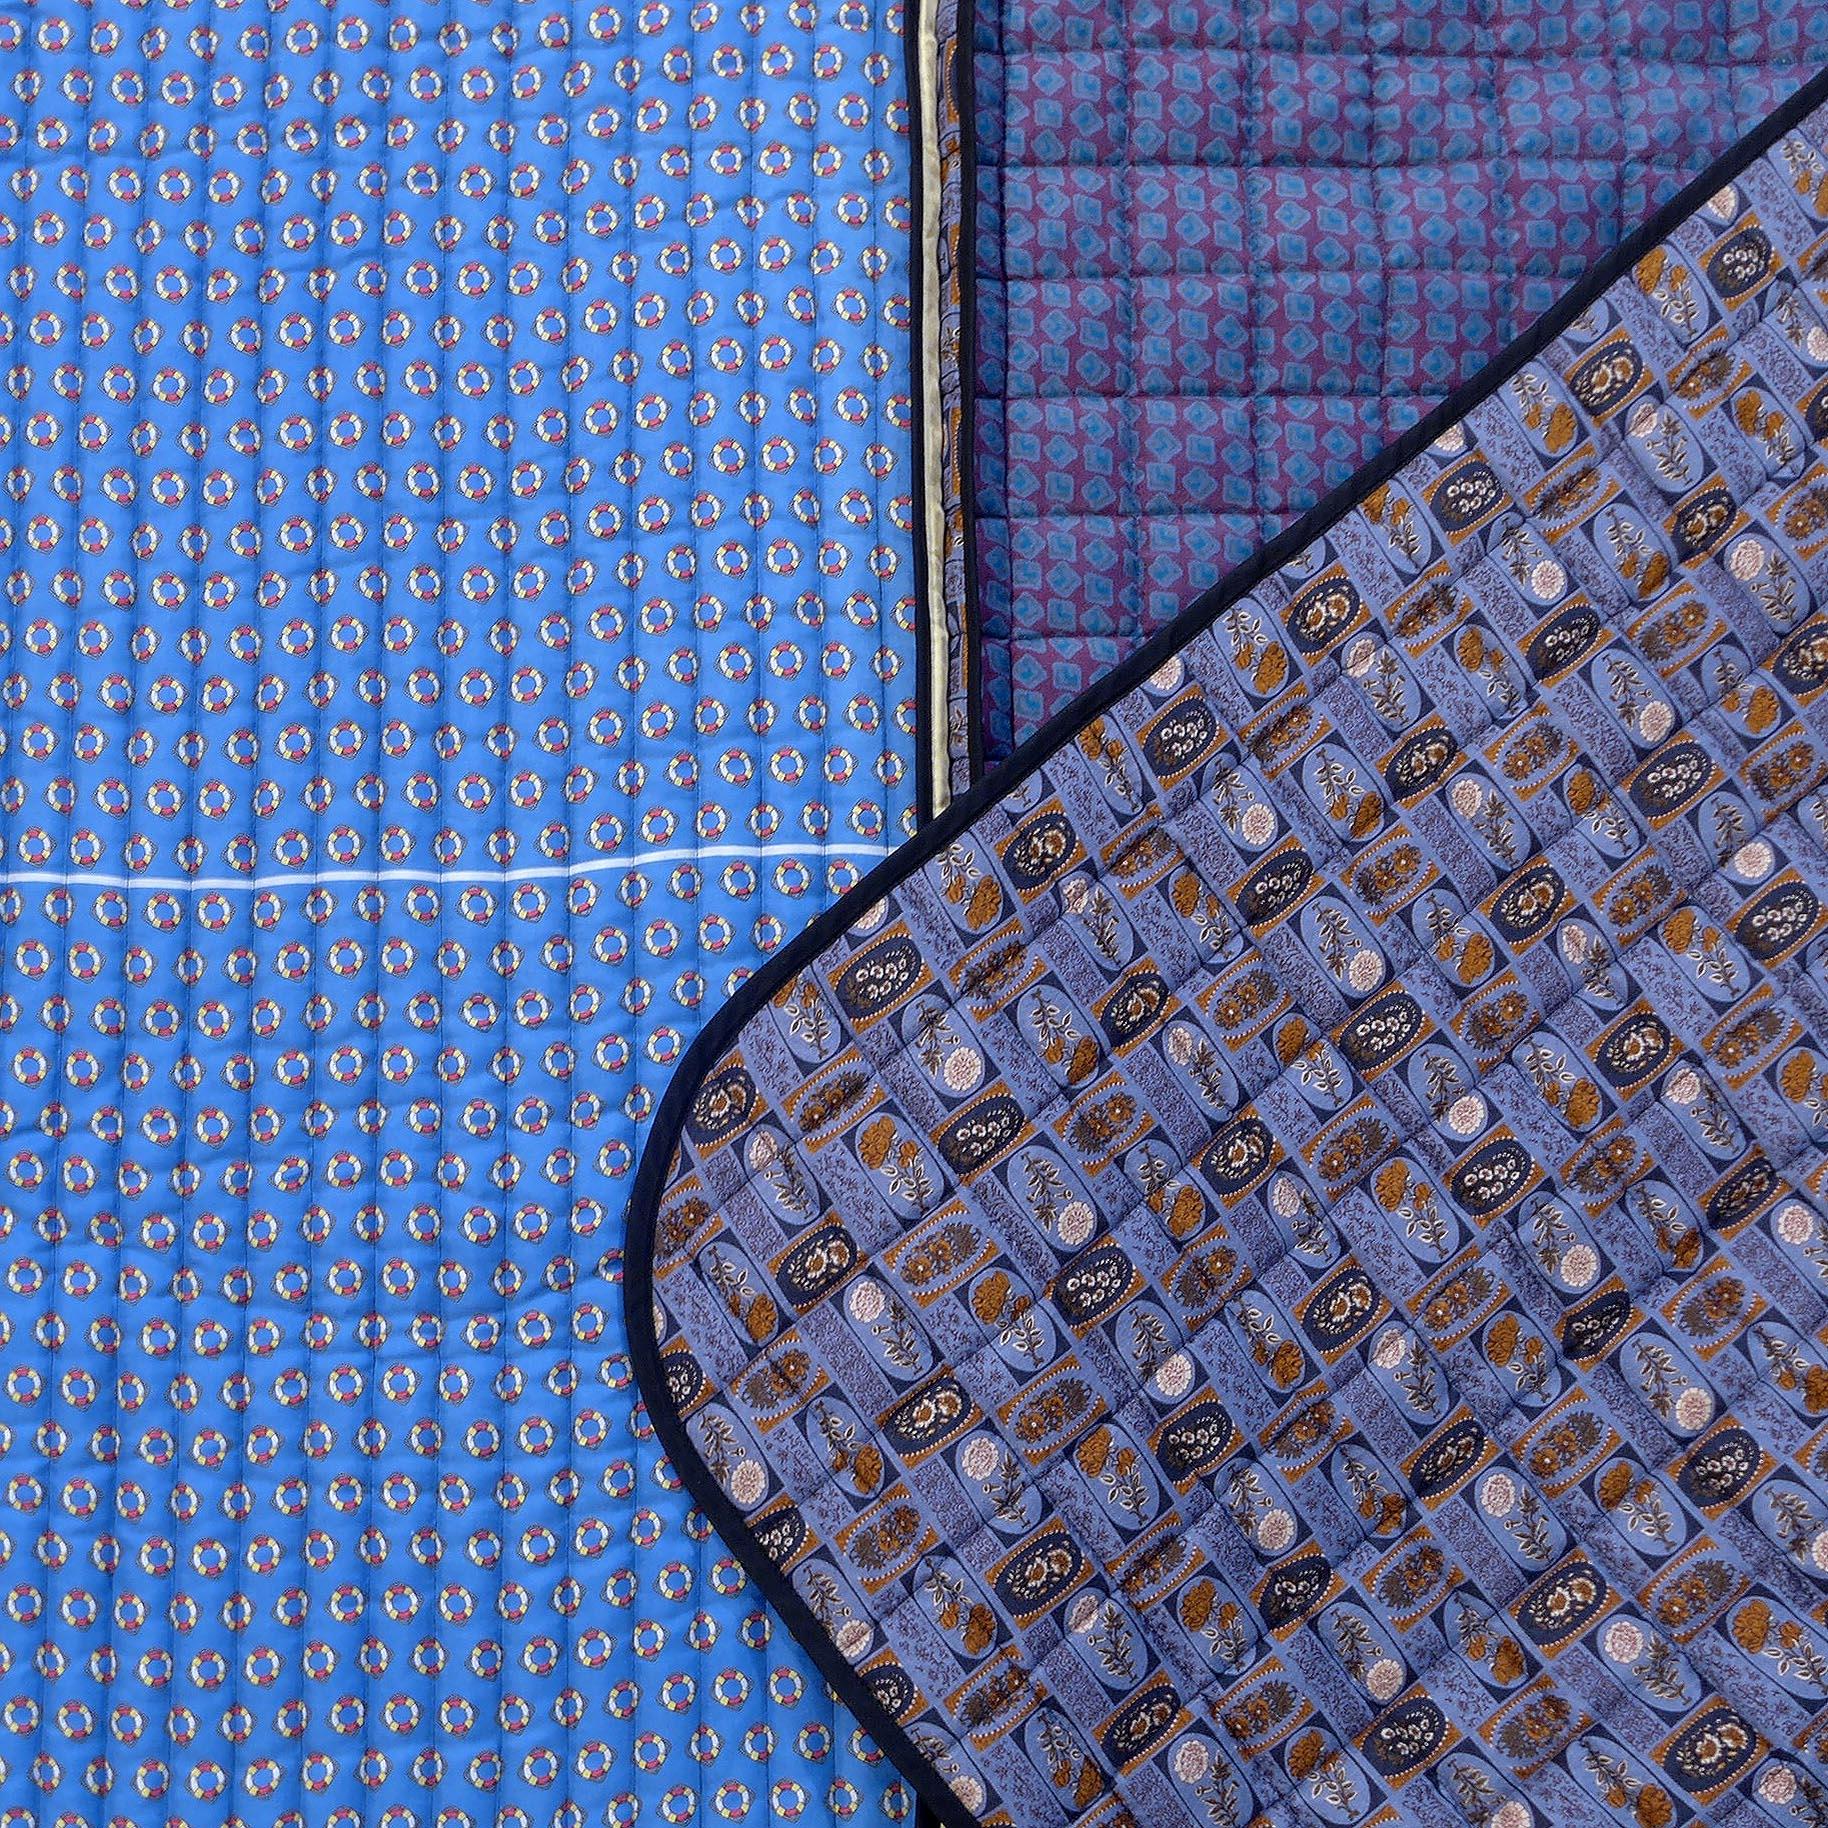 Quilted Piet Hein Eek Vintage Italian Silk Quilt Blanket For Sale